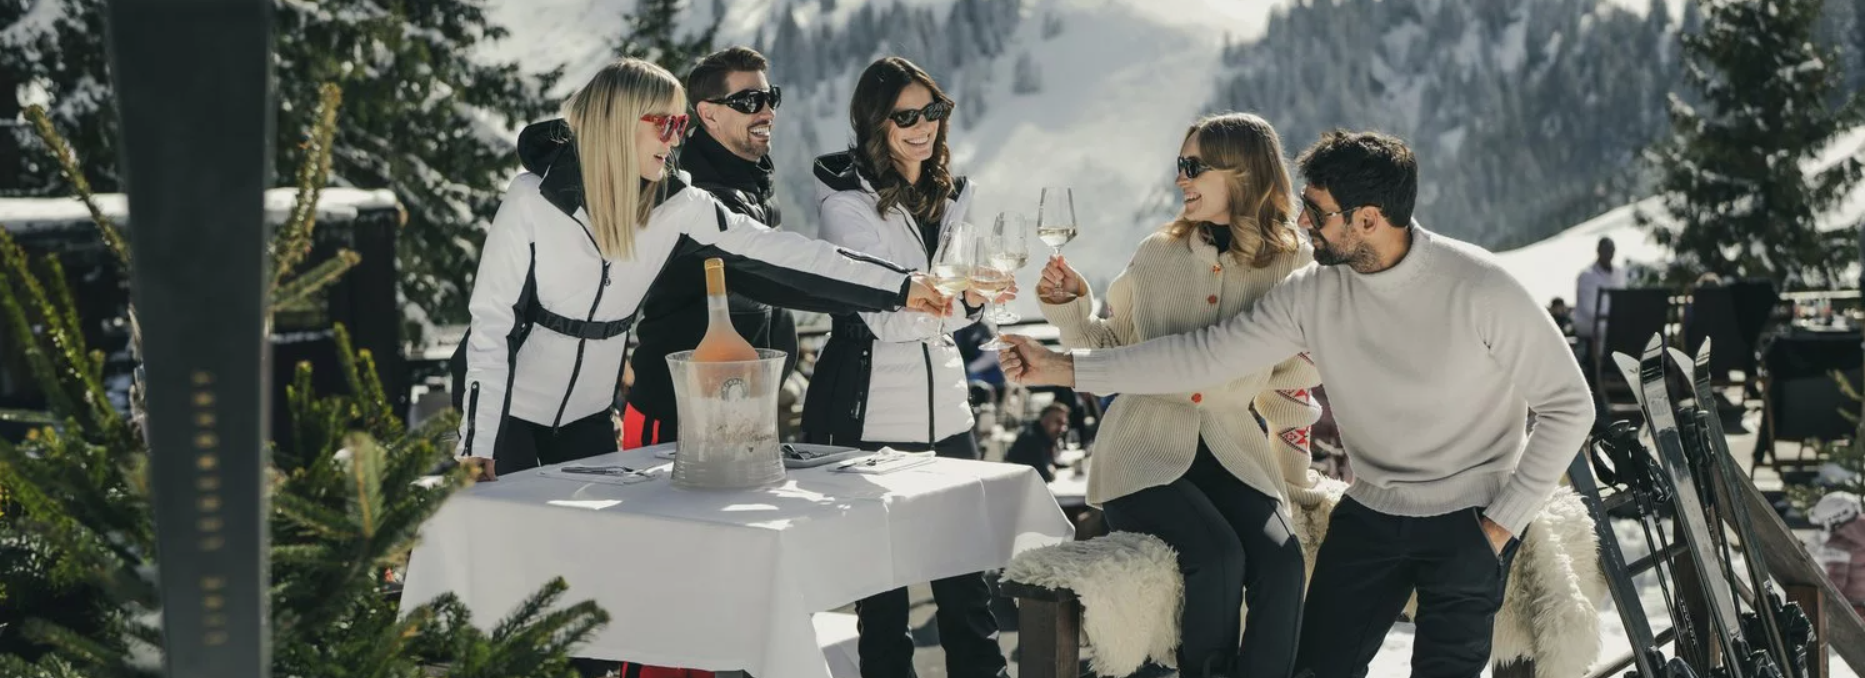 Lifestyle am Berg Freunde Champagner Apres Ski